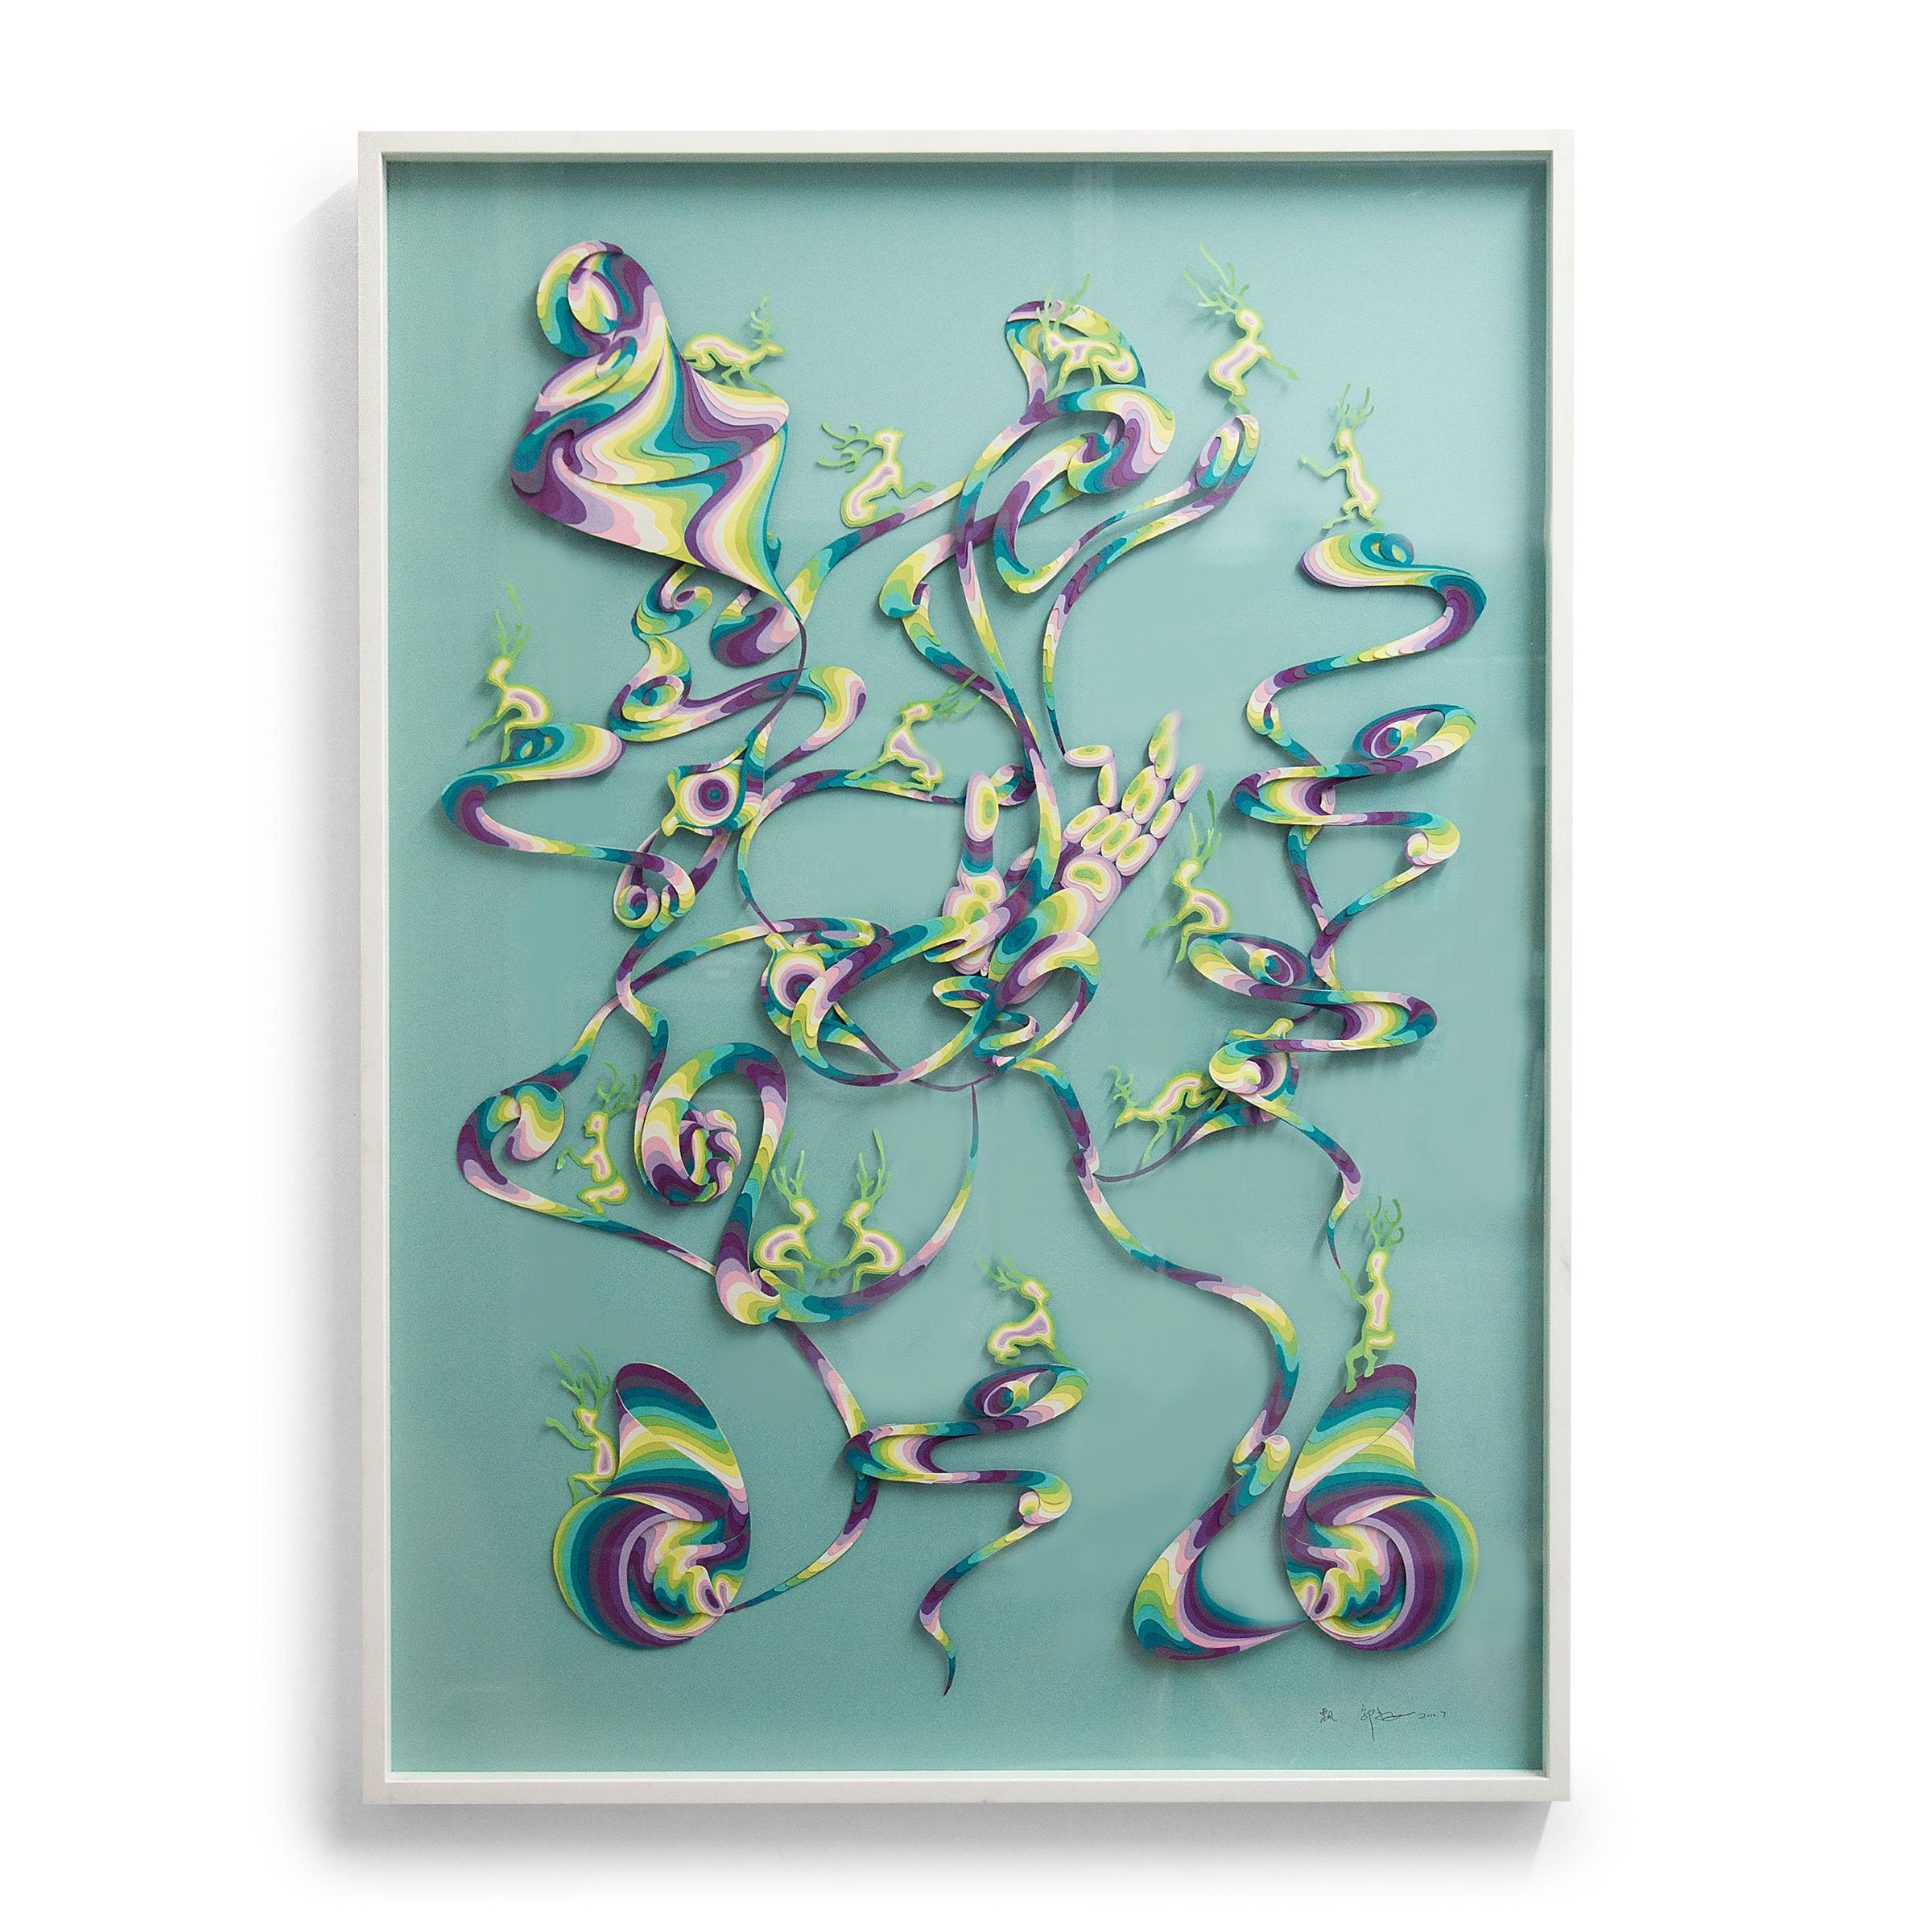 "Rainbow Cloud - Floating, " Paper-Cut Collage, 2012 - Mixed Media Art by Wu Jian'an